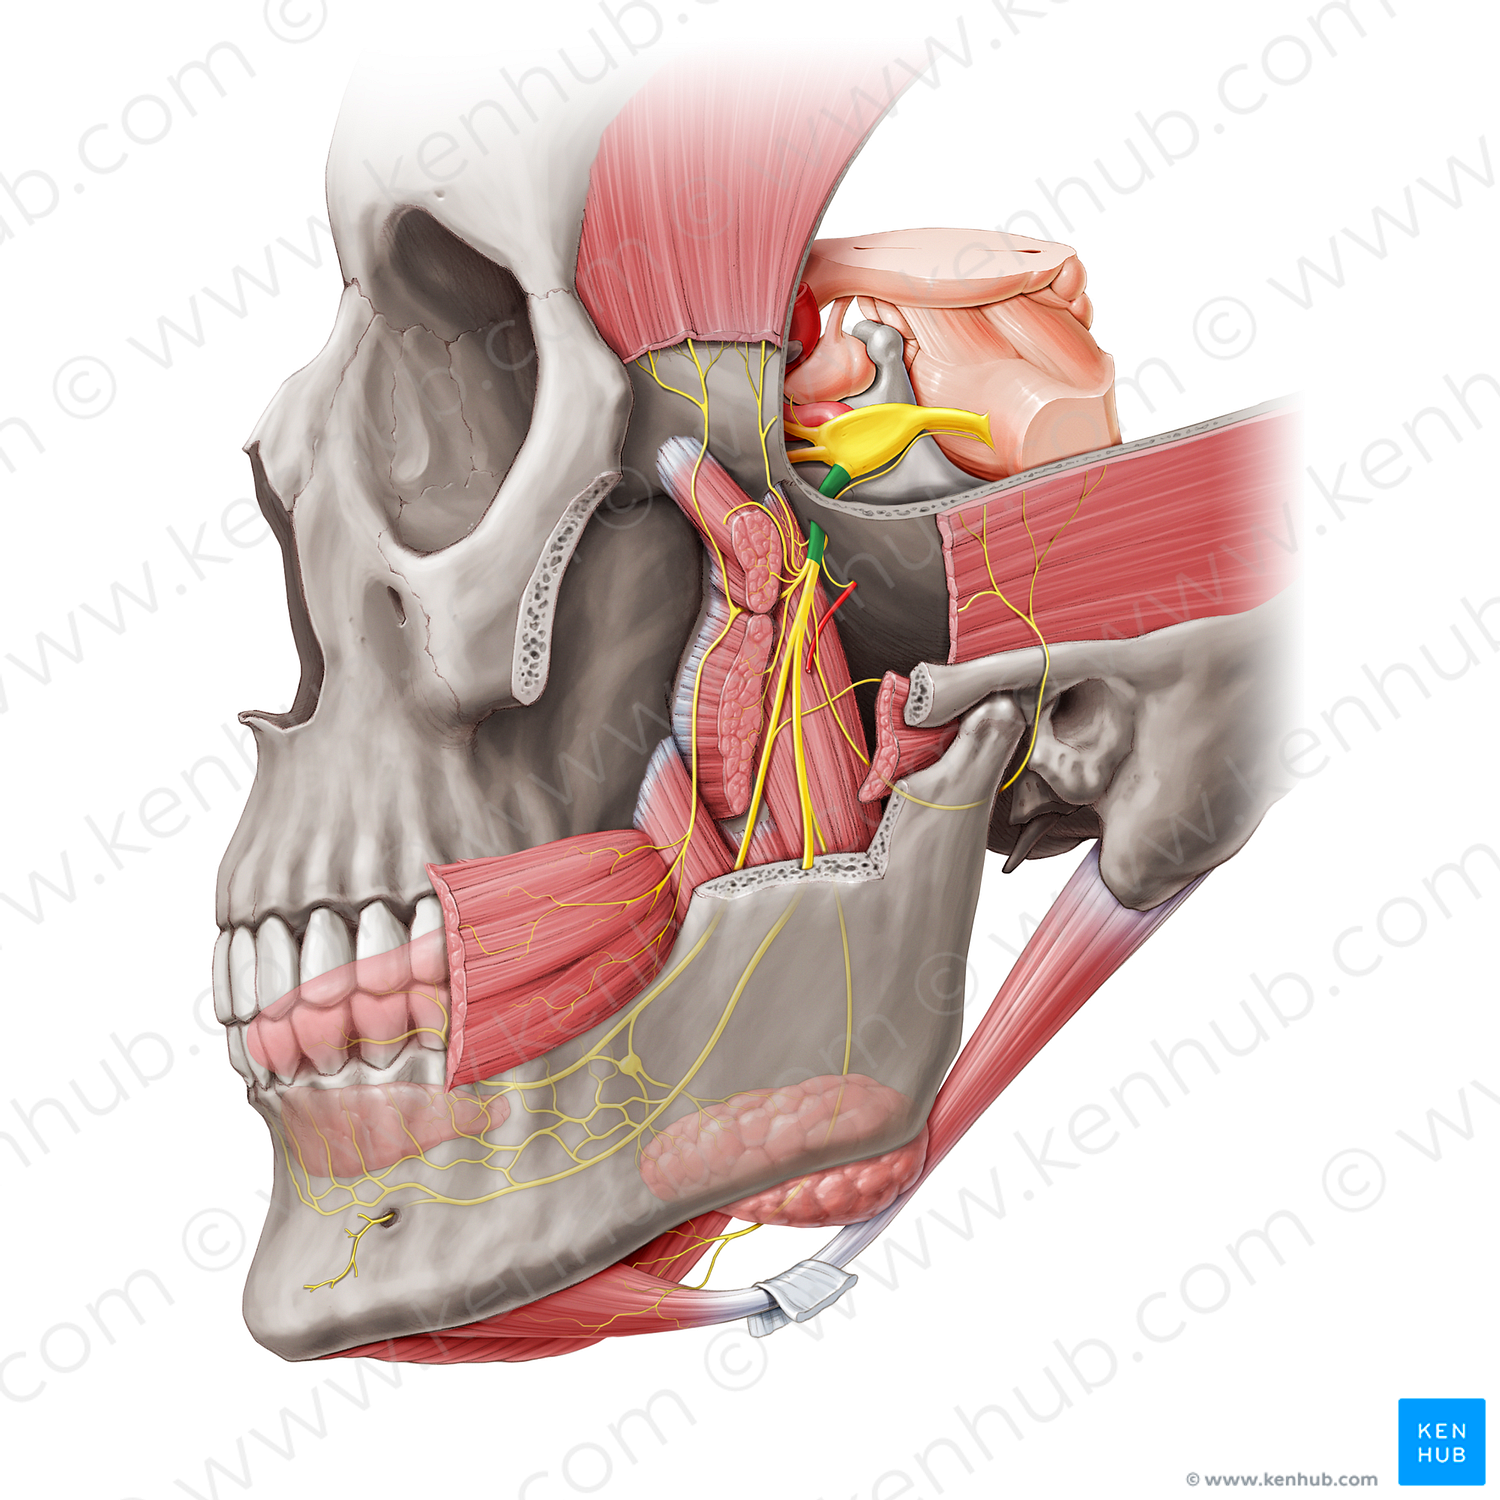 Mandibular nerve (#6542)